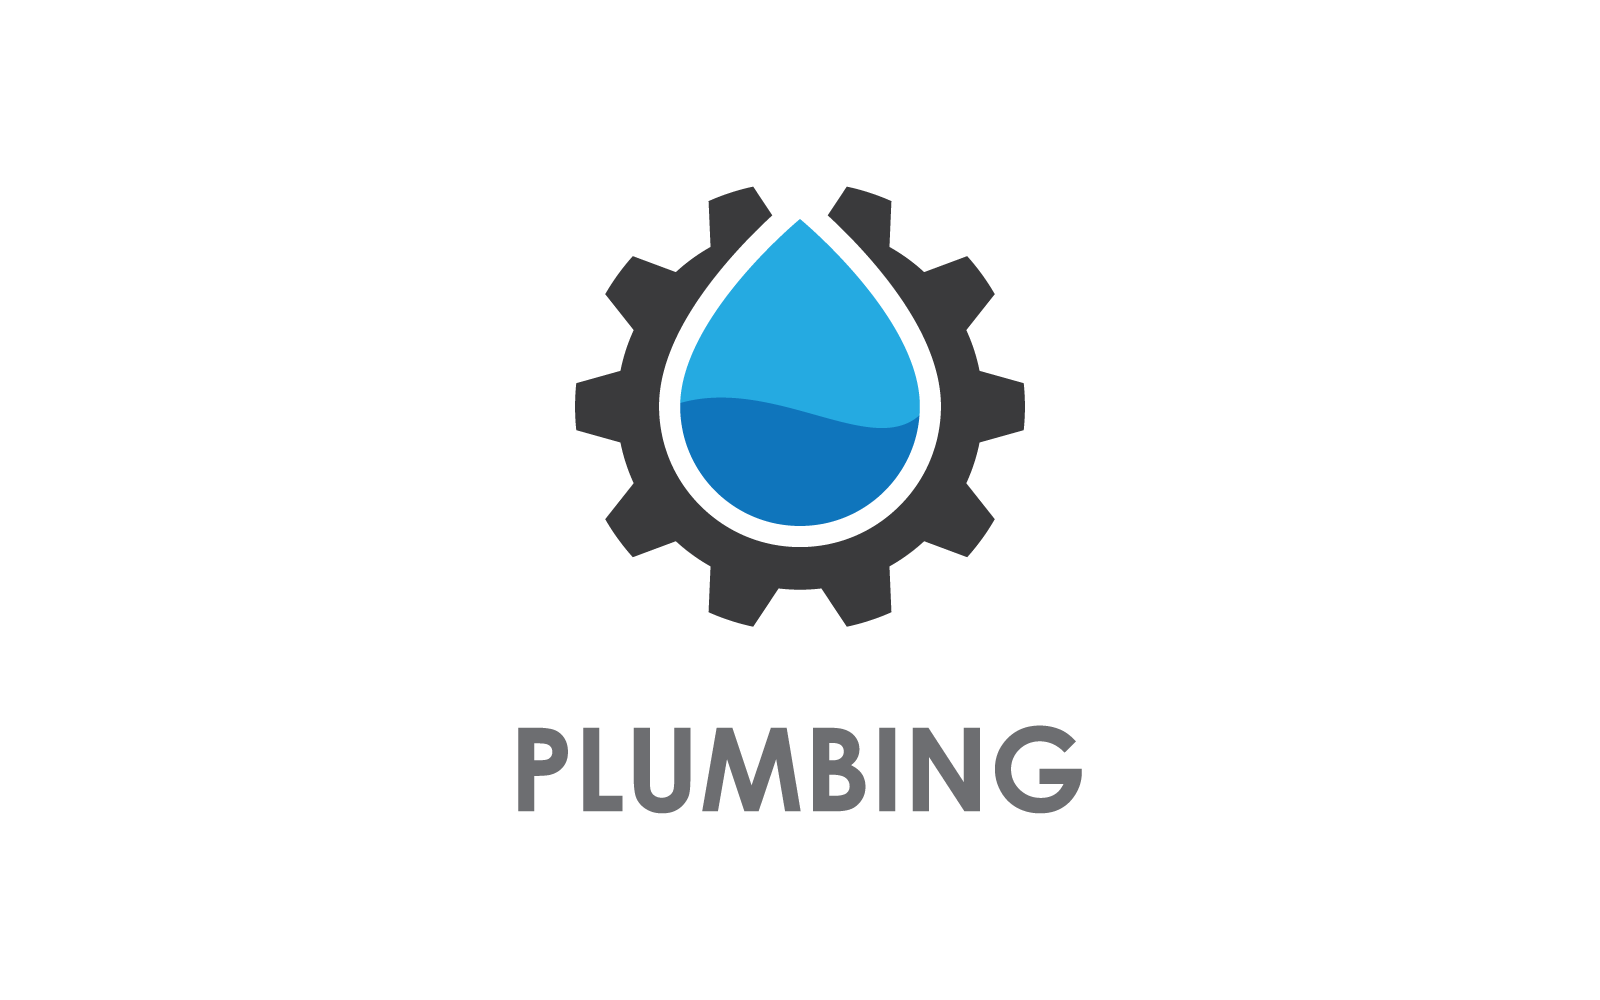 Plumbing logo vector illustration design business